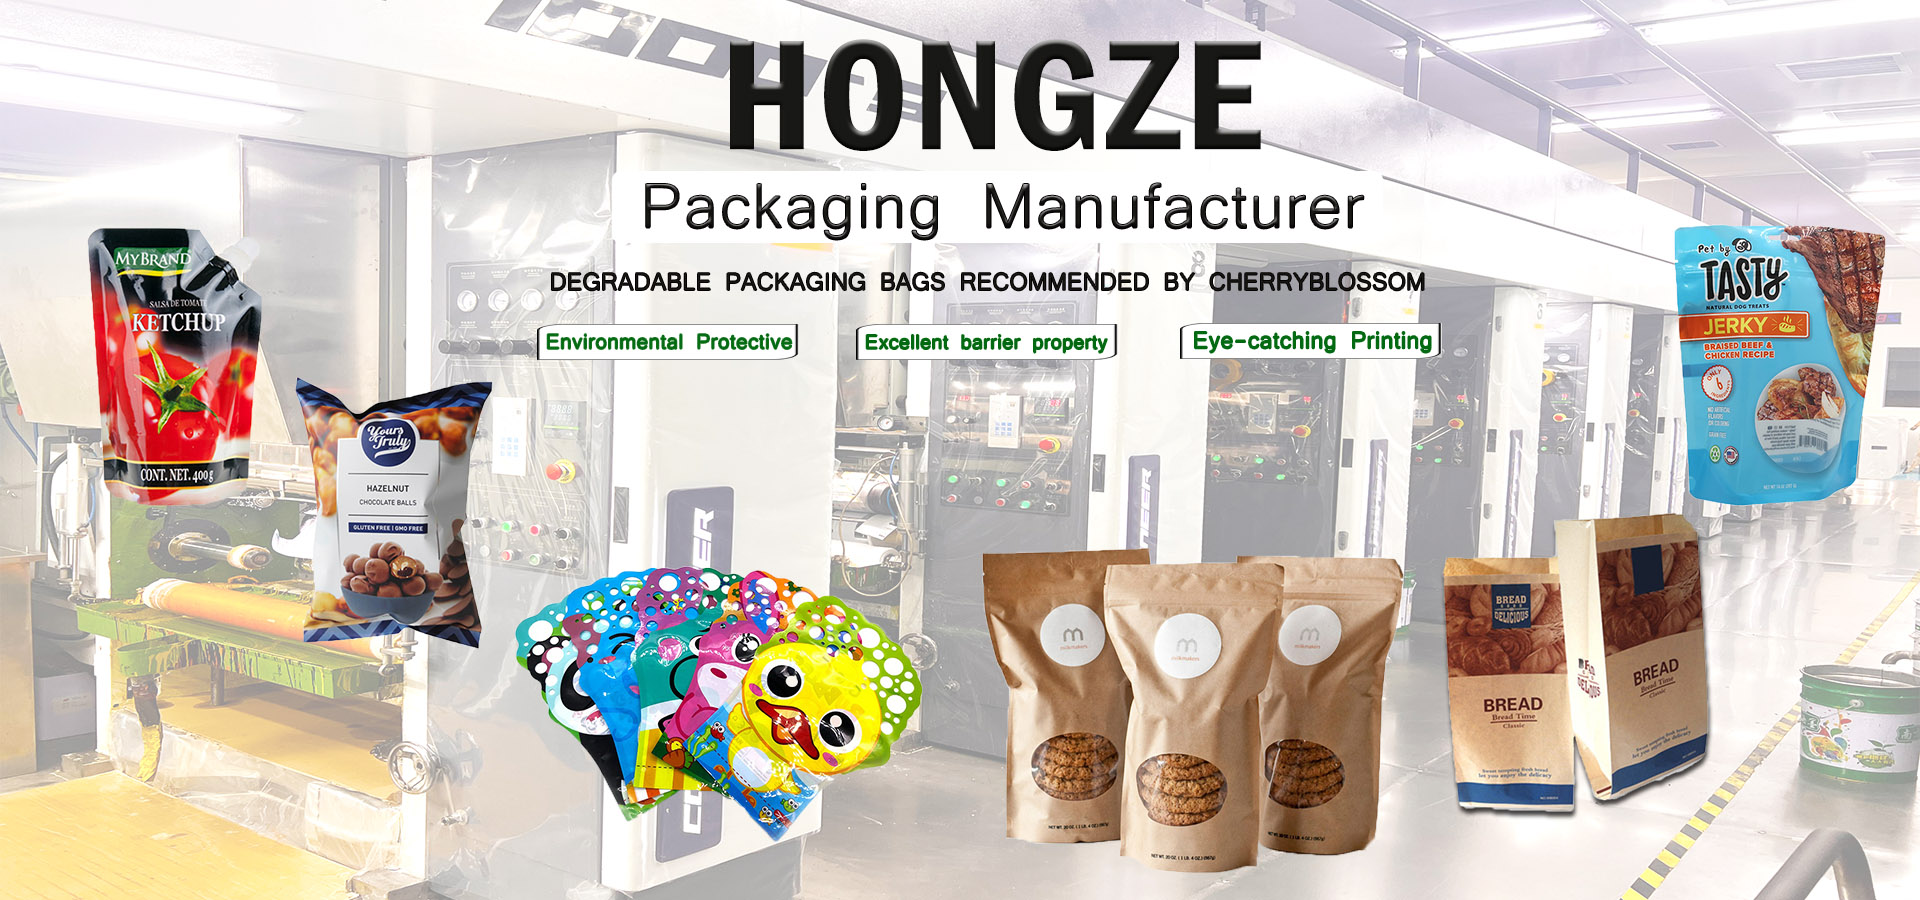 hongze packaging 